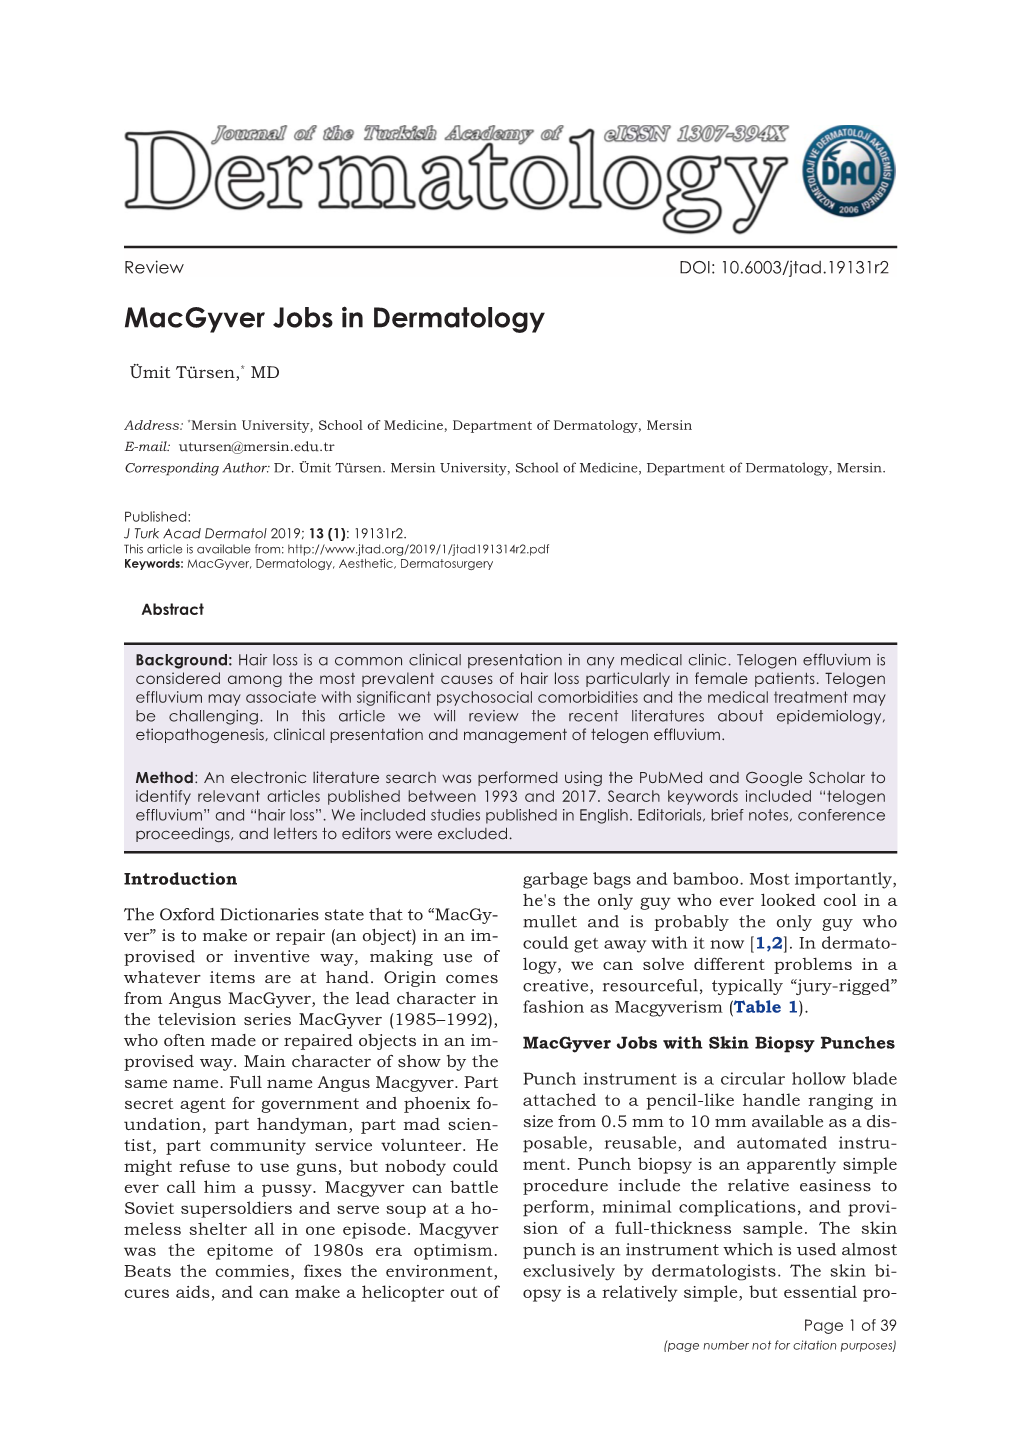 Macgyver Jobs in Dermatology